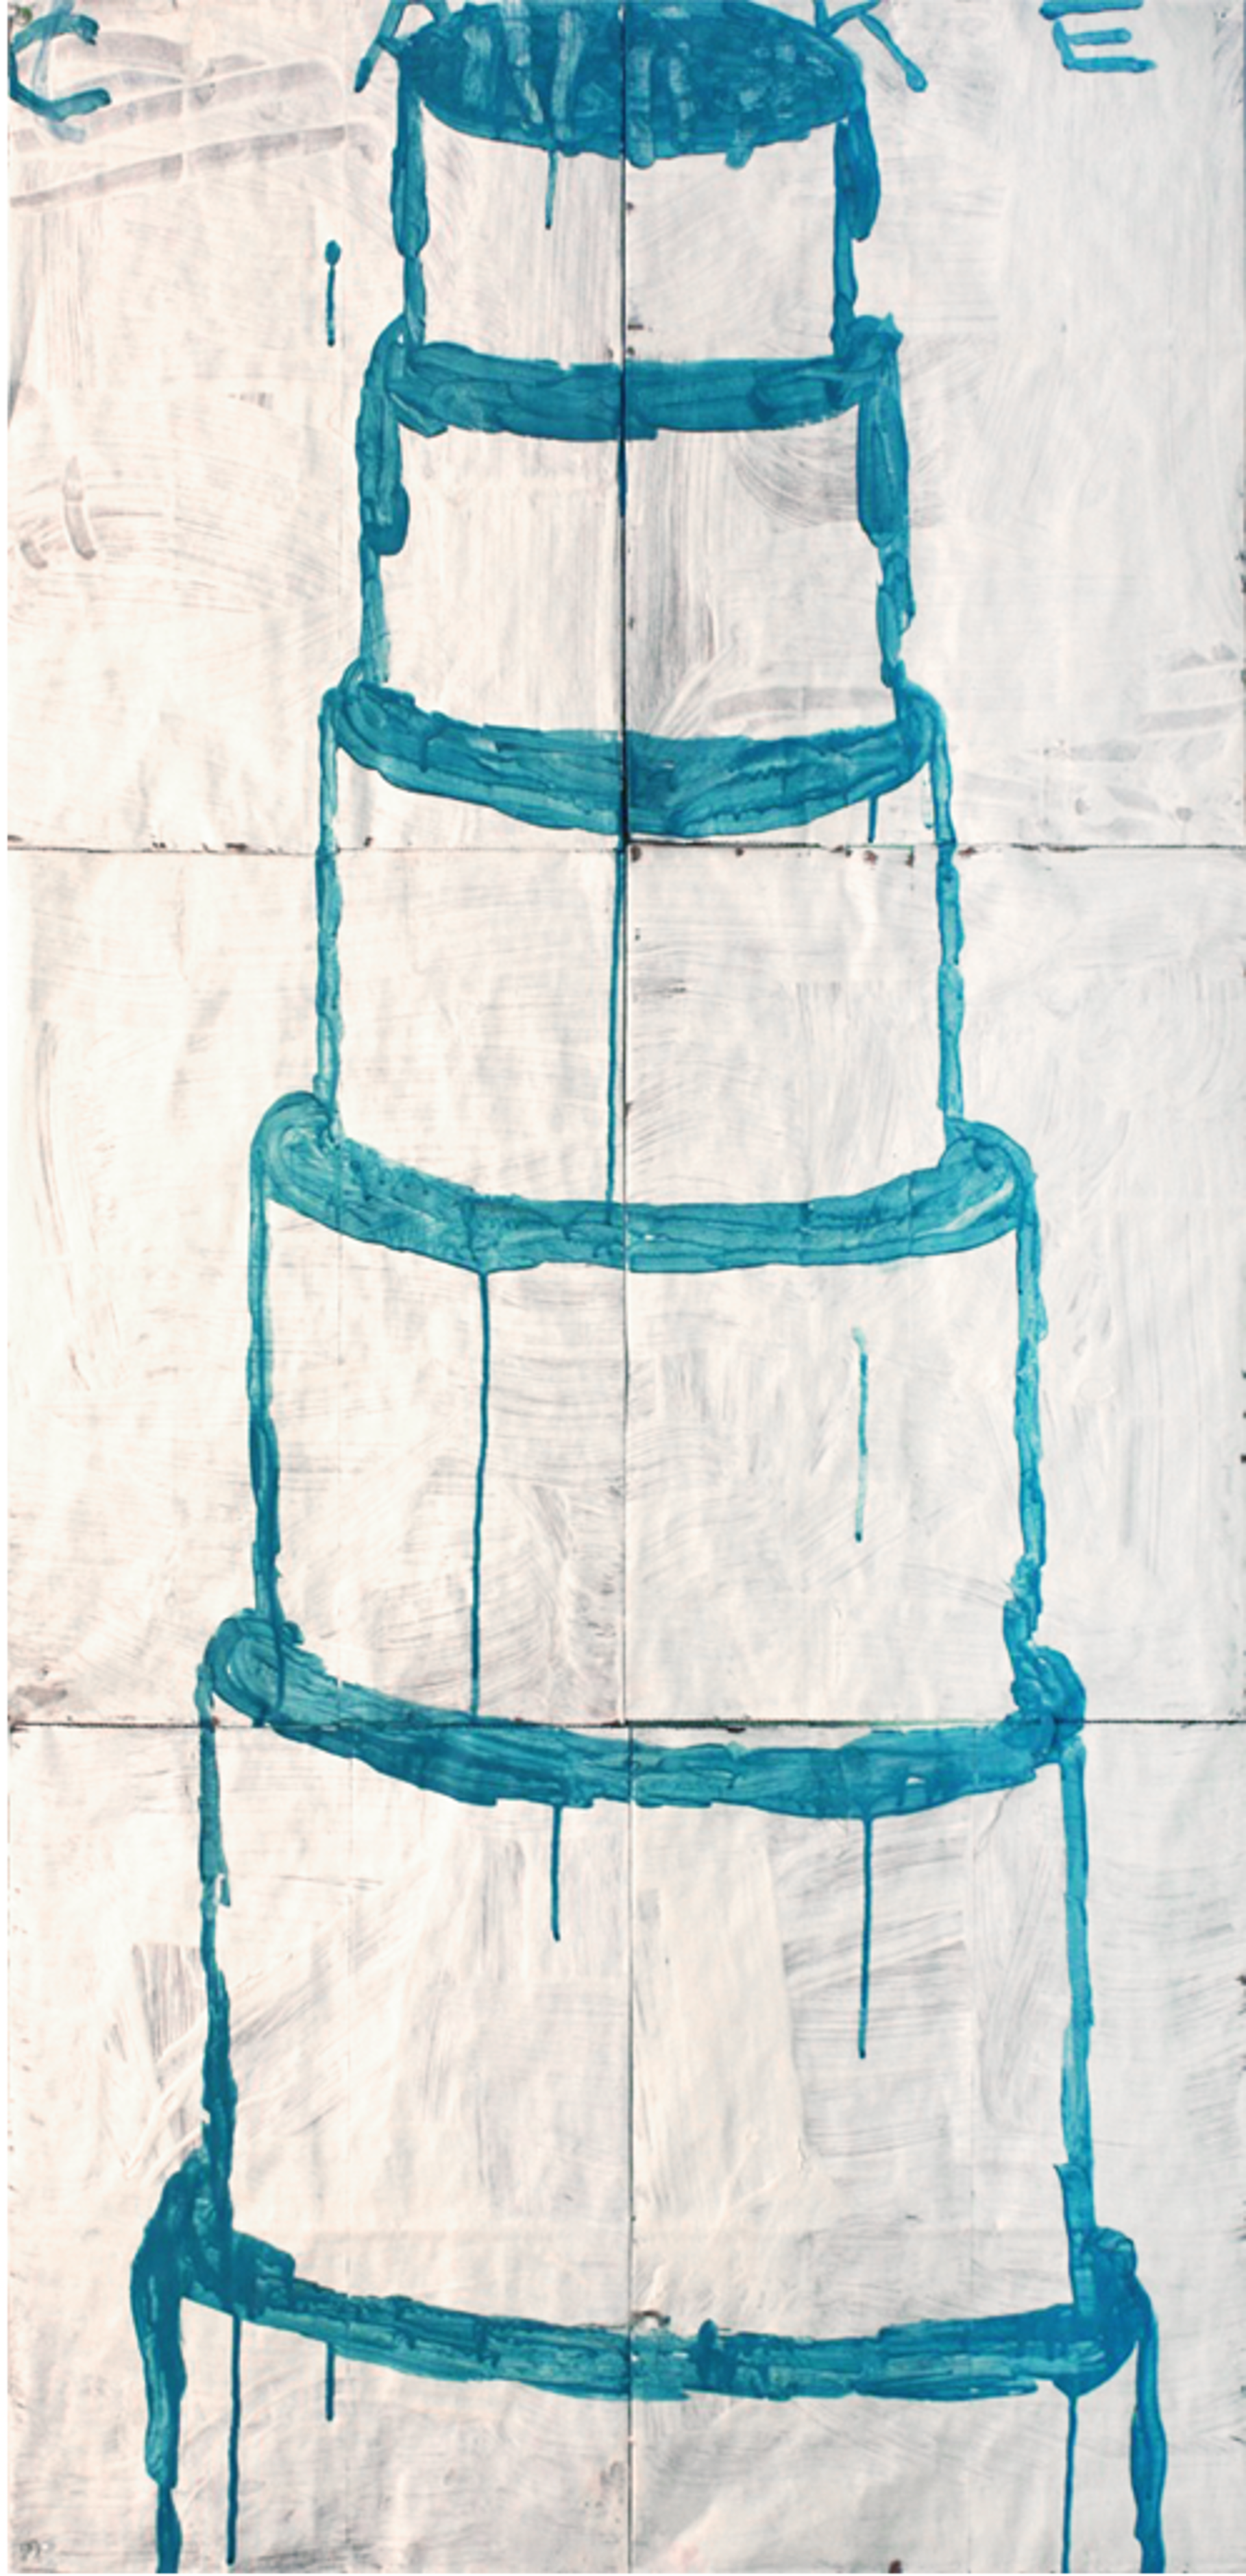 Stacked Cake (Turquoise on Ivory) by Gary Komarin